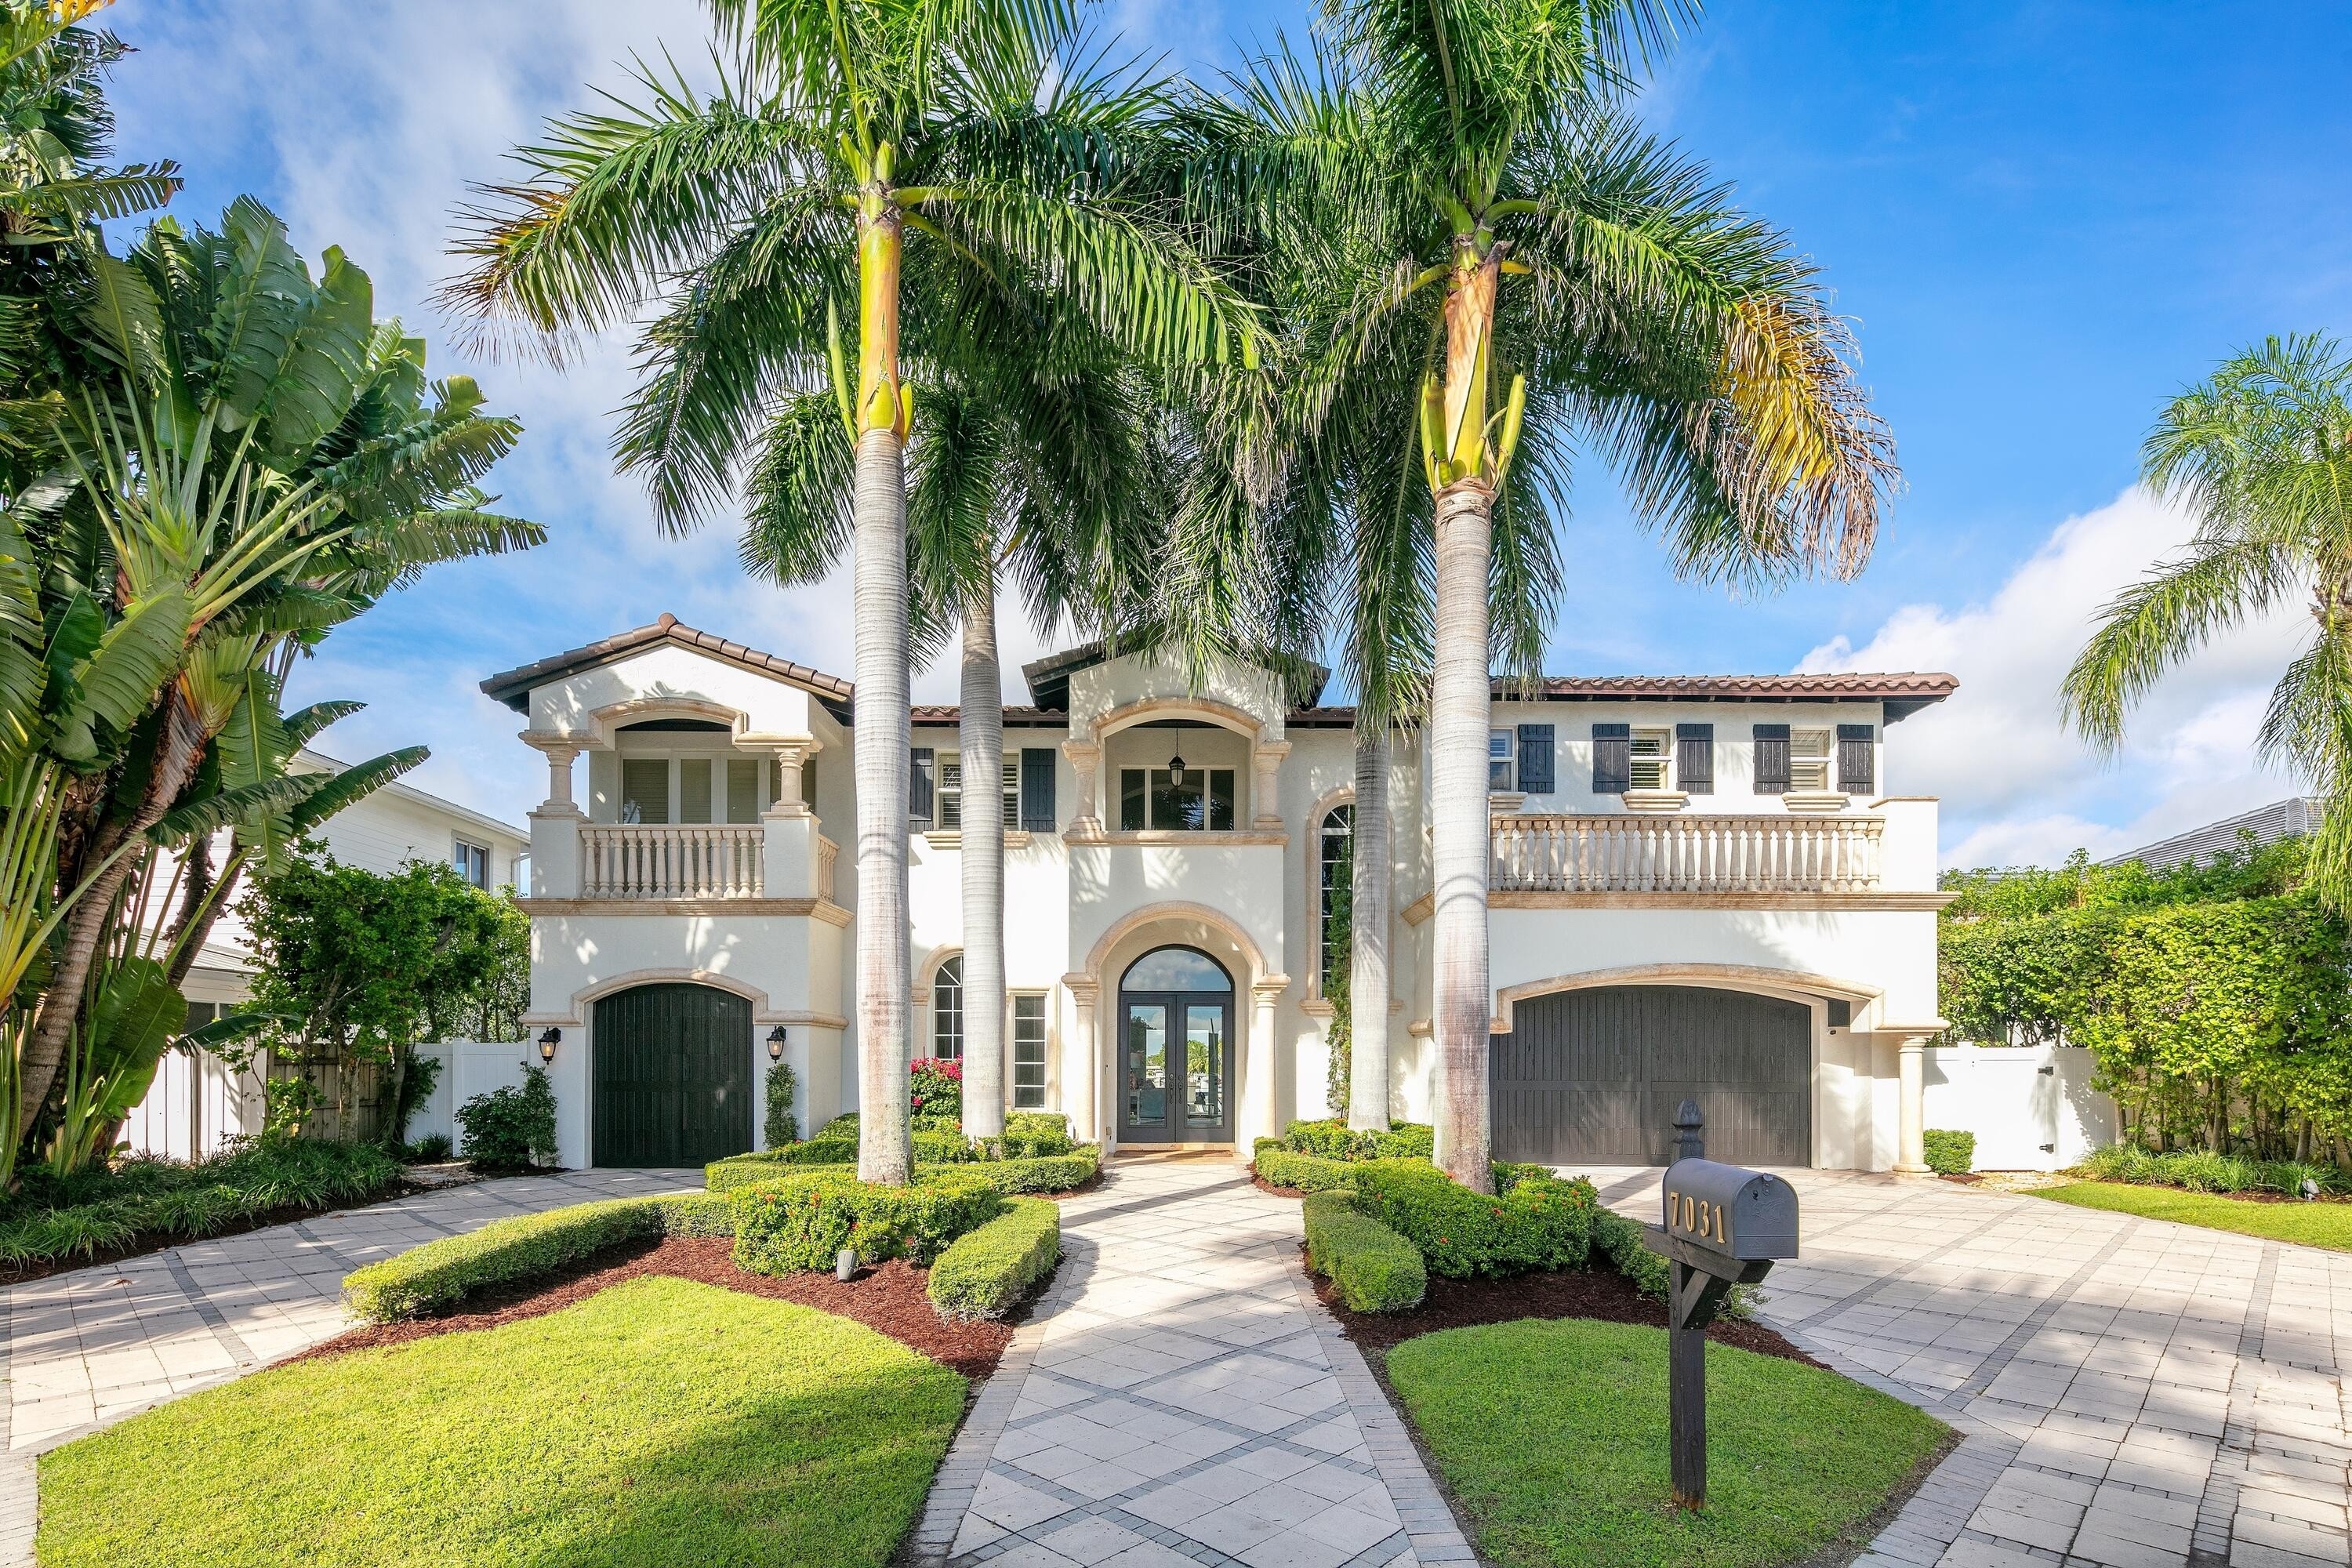 Single Family Home for Sale at Northeast Boca Raton, Boca Raton, Florida 33487